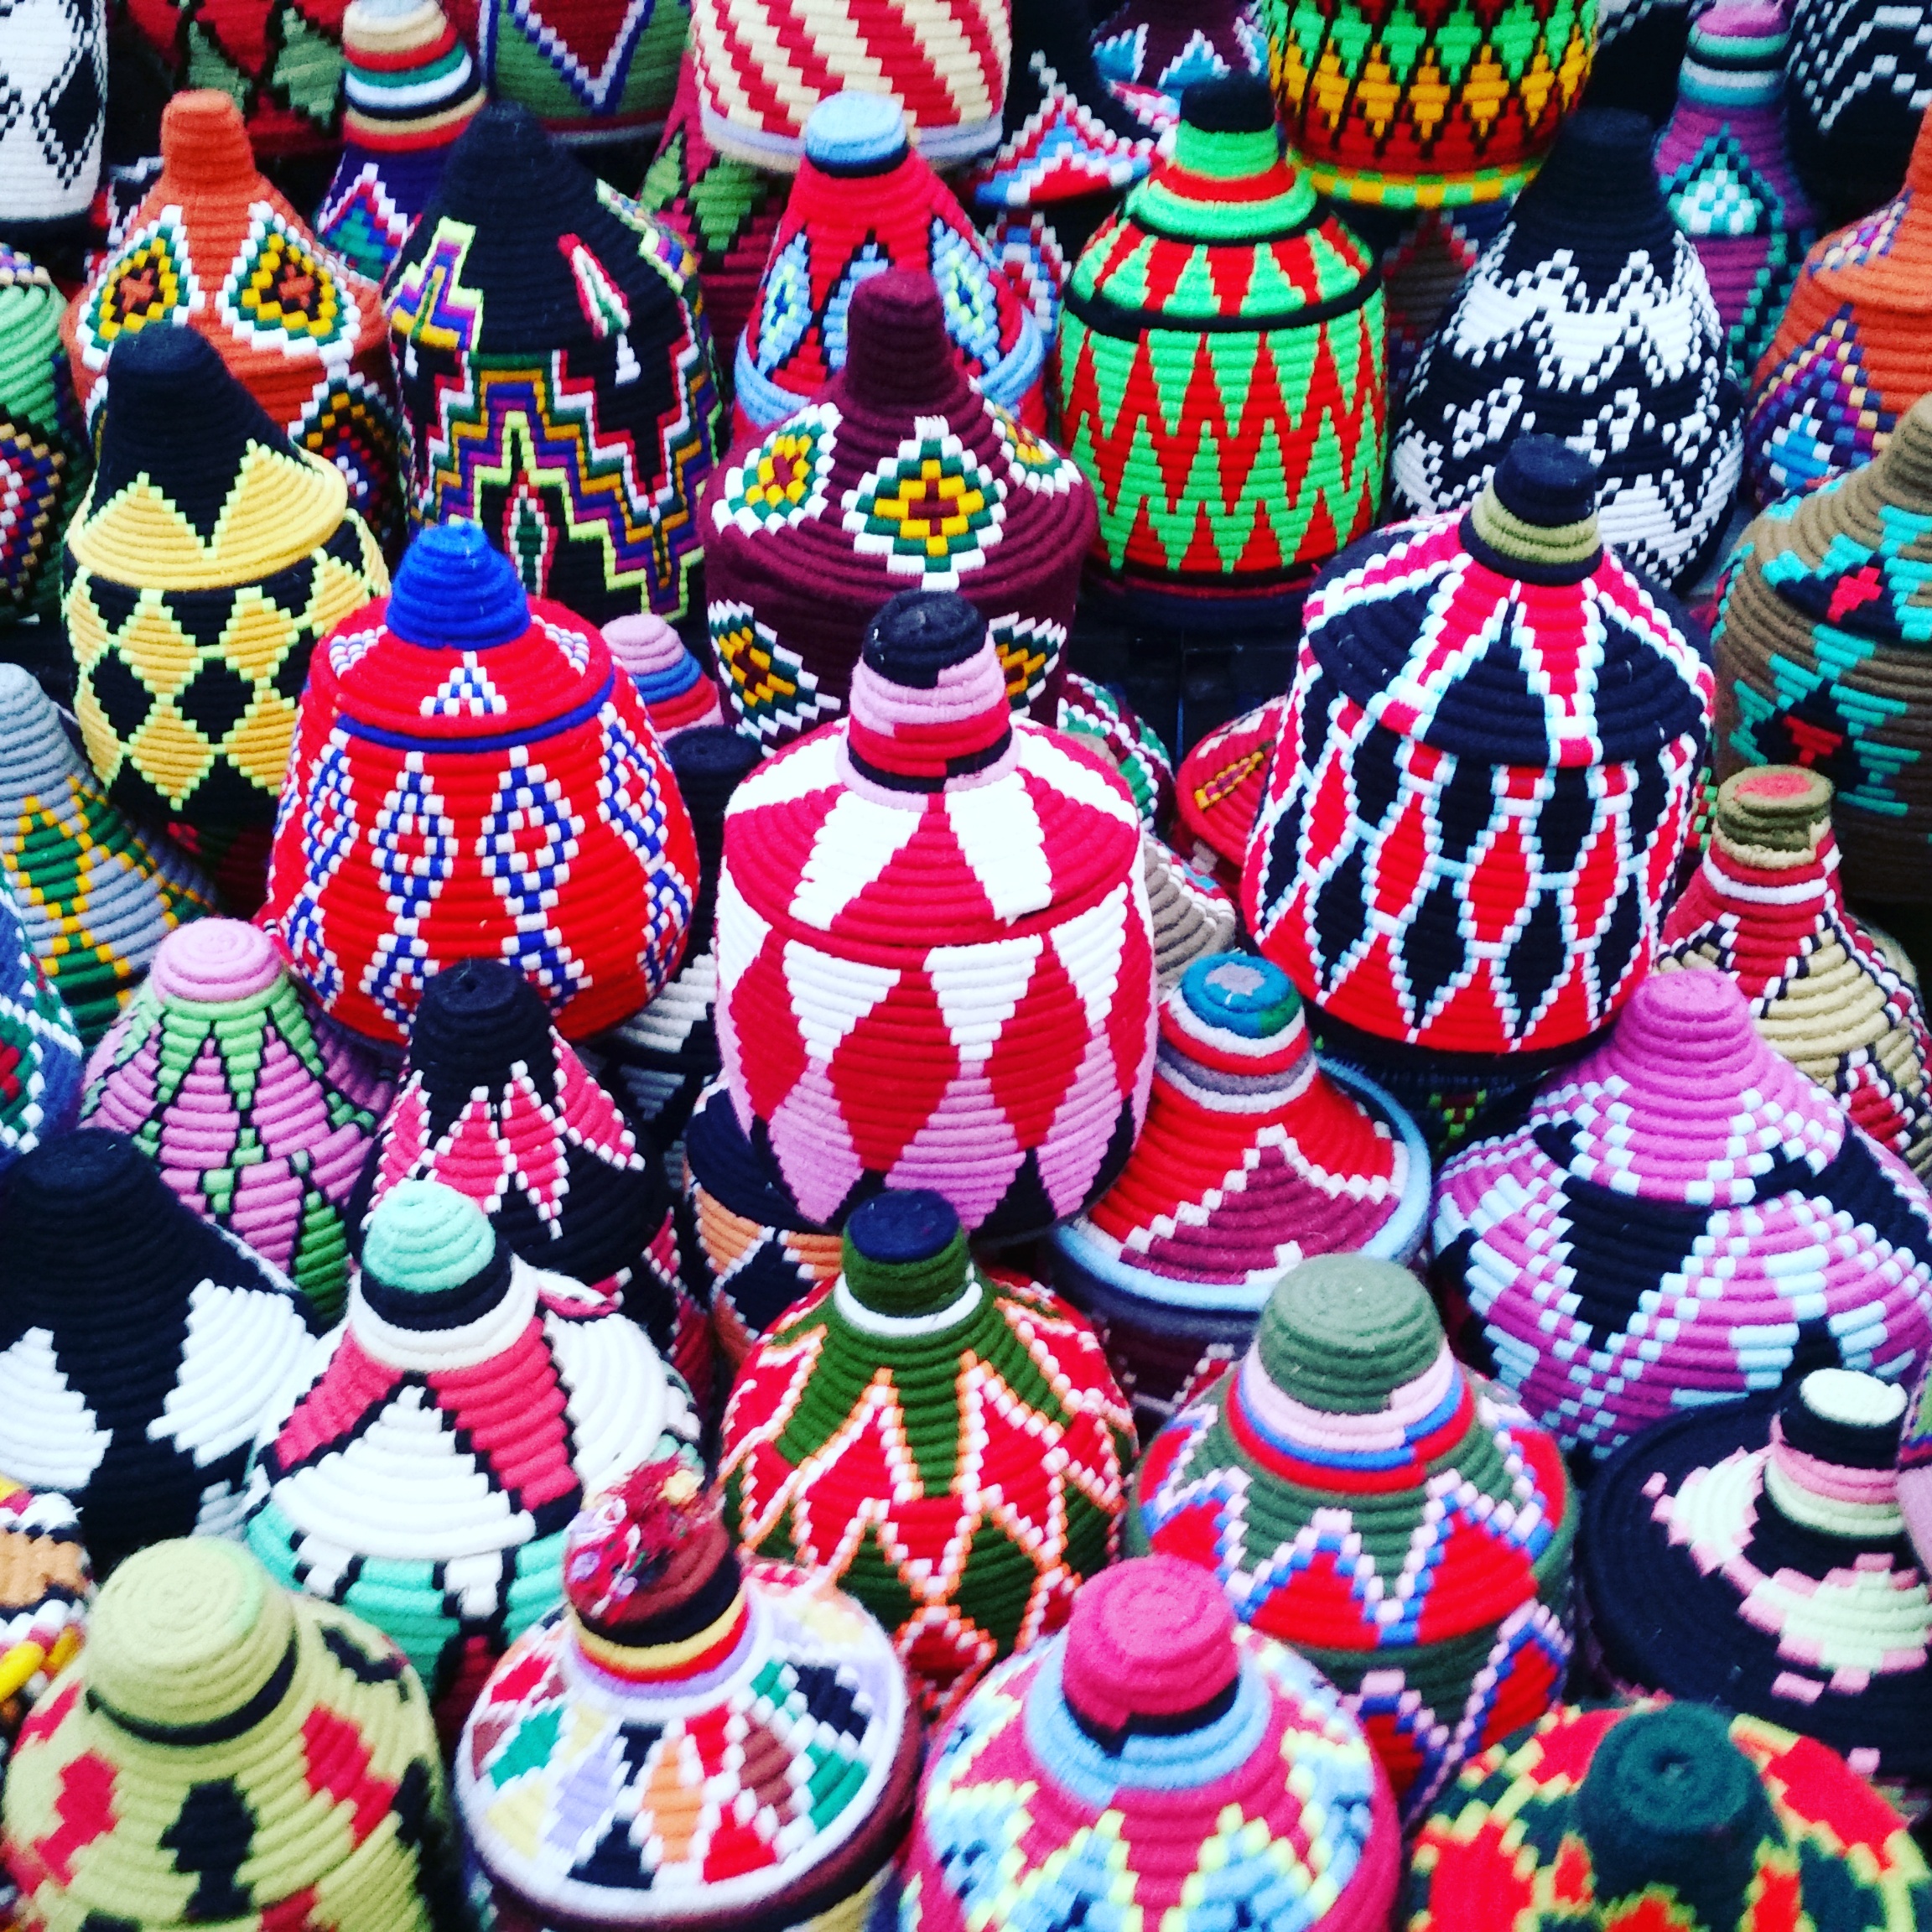 Handmade baskets in Marrakesh